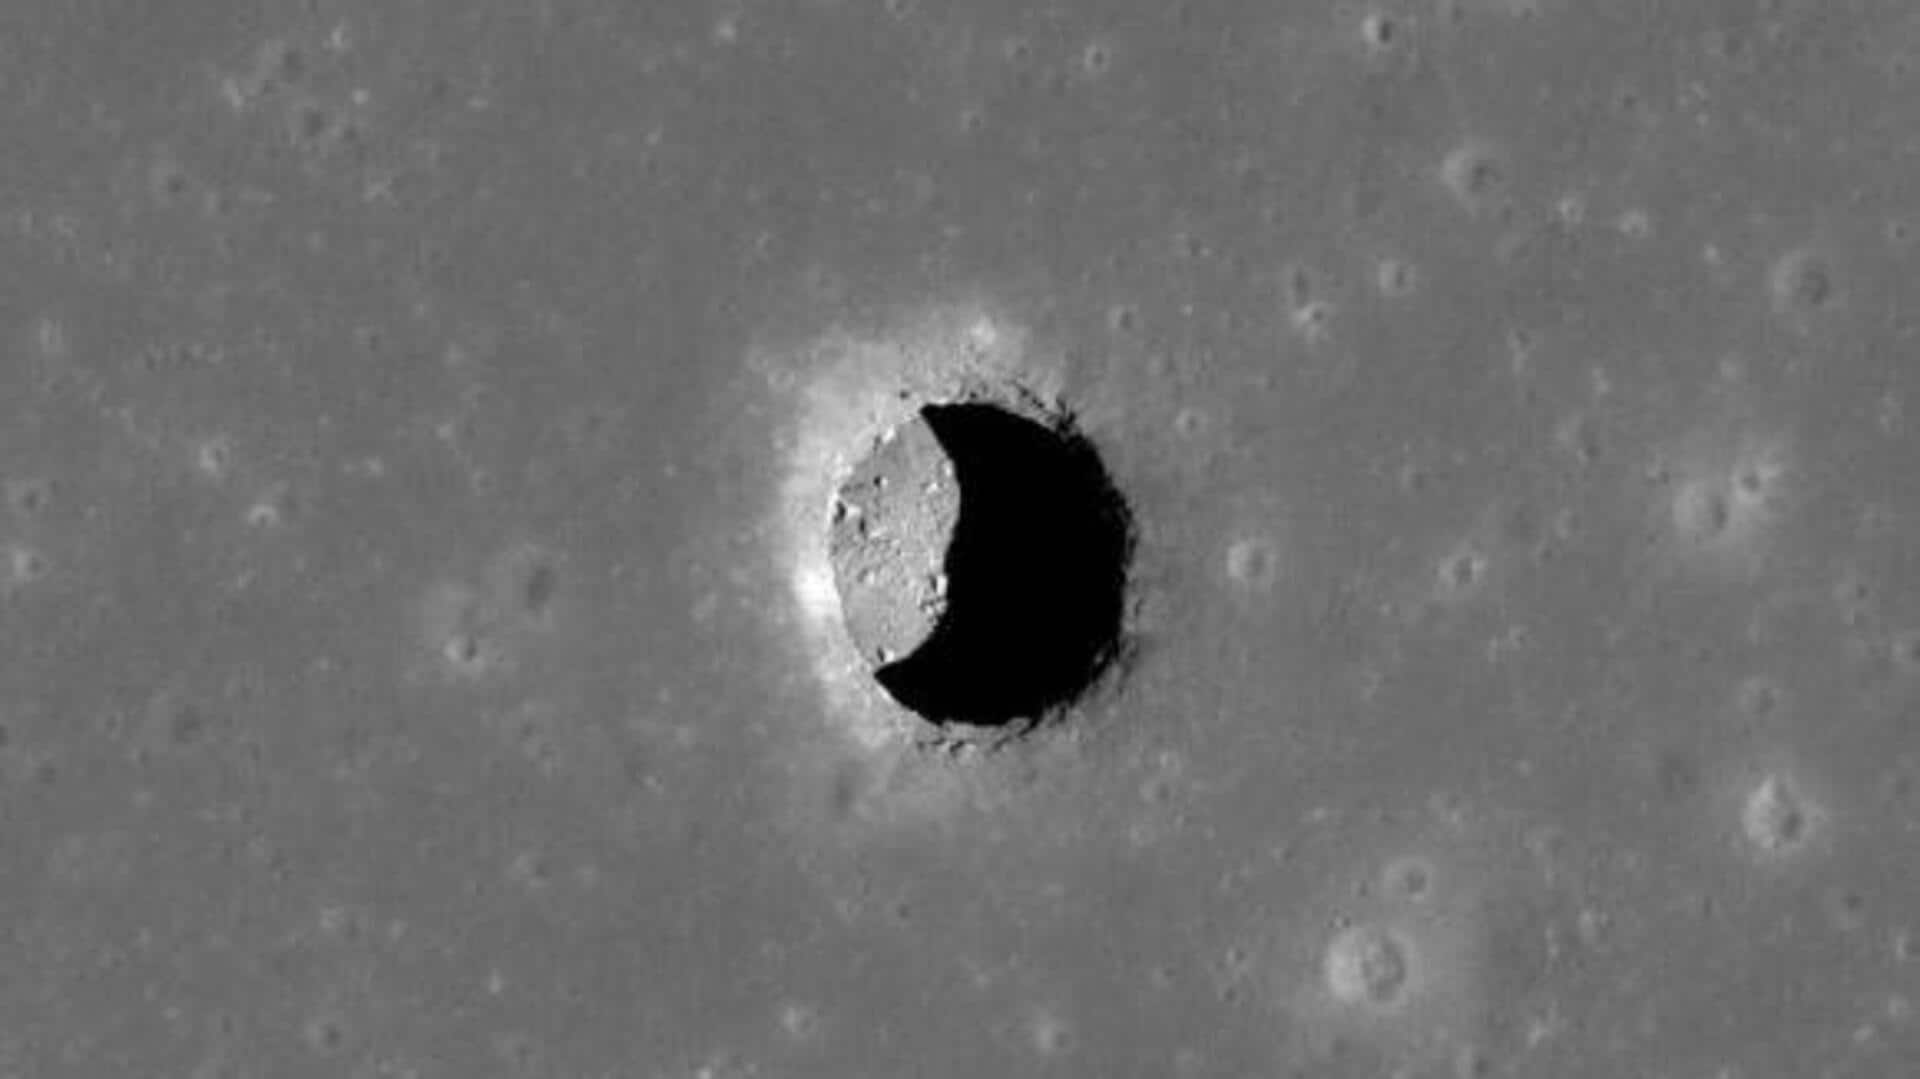 NASA orbiter discovers mysterious circular pit on Martian surface